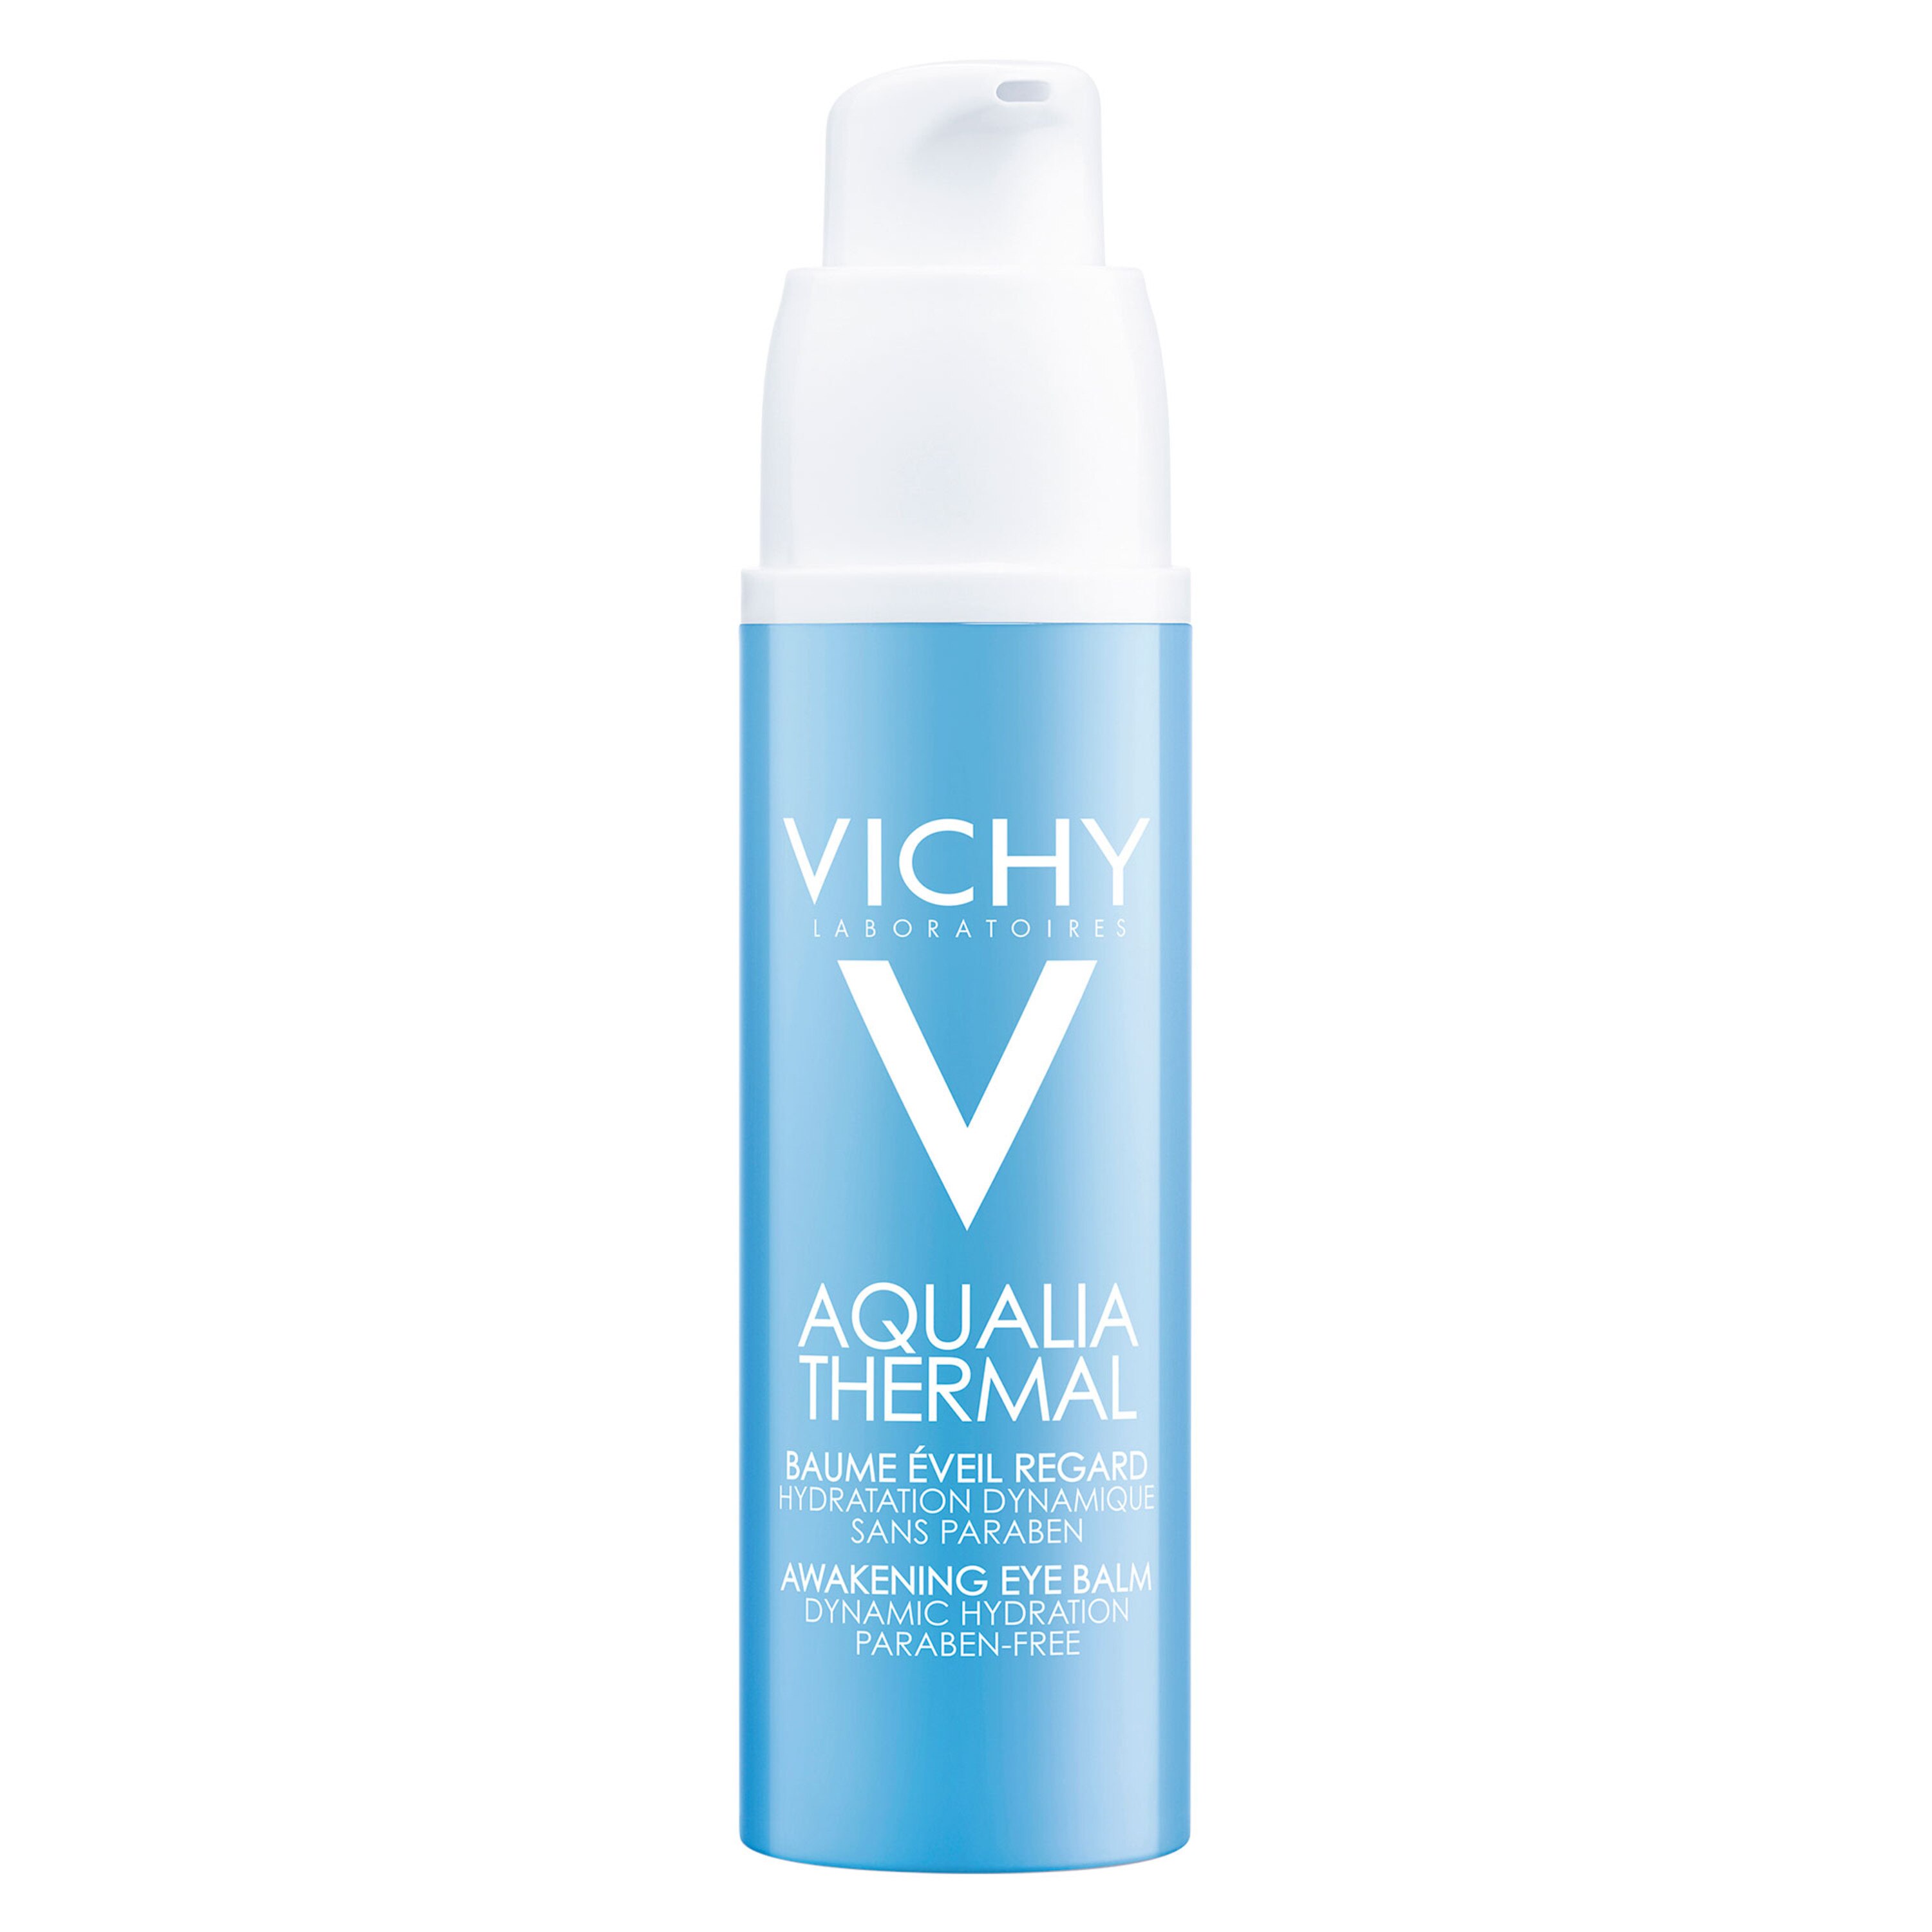 Vichy Aqualia Thermal Awakening Eye Cream for Dark Circles